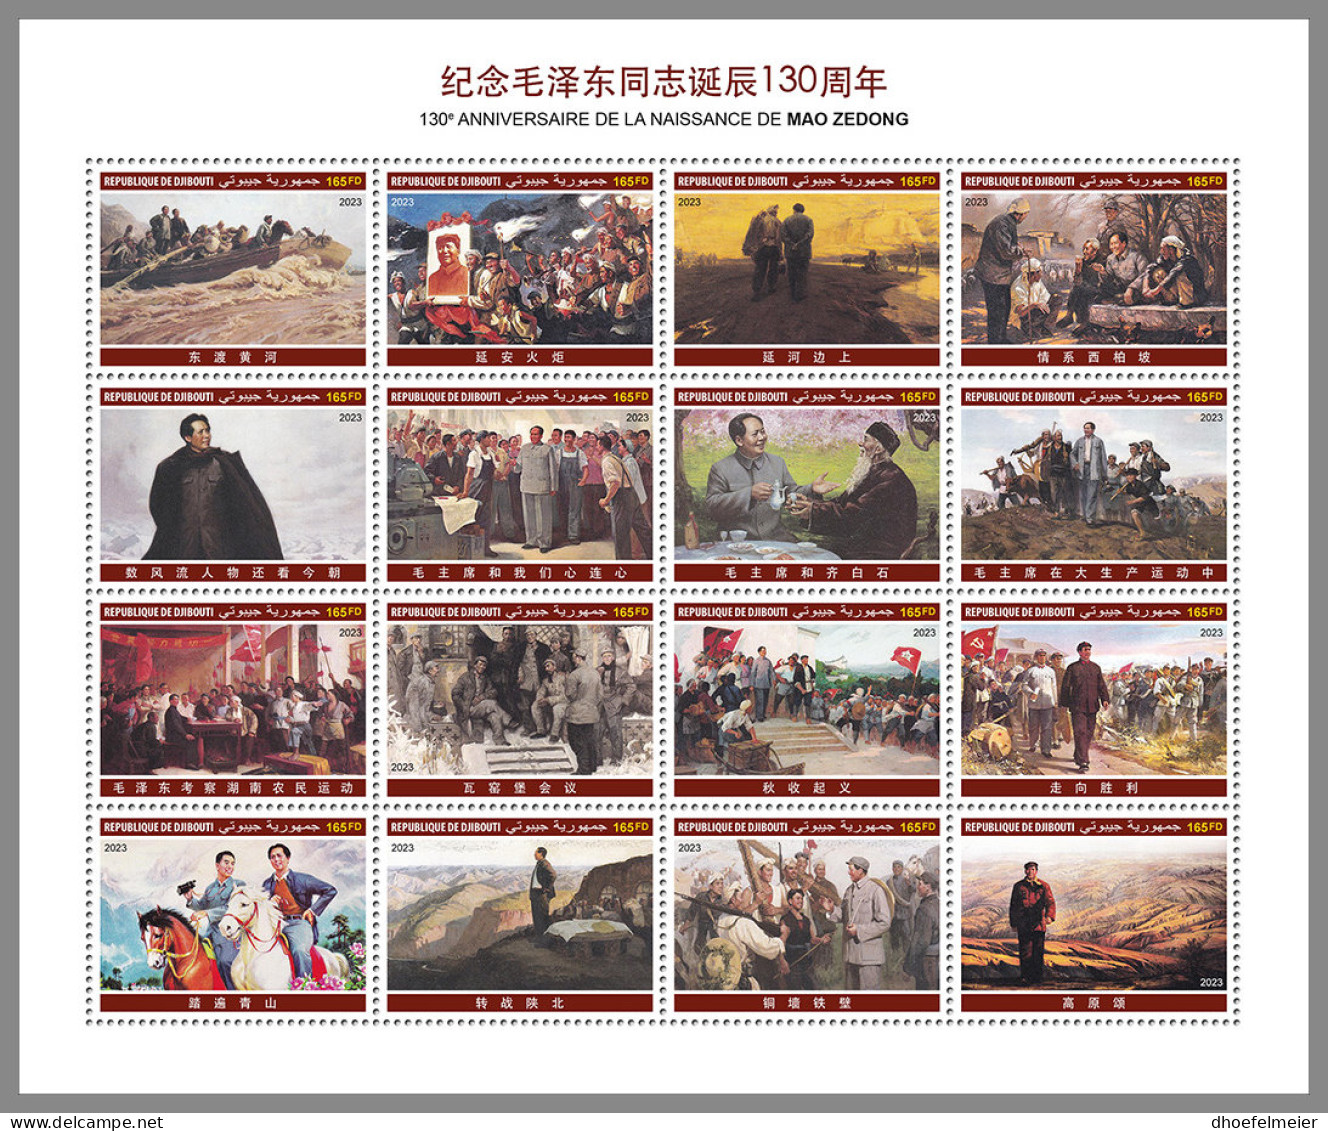 DJIBOUTI 2023 MNH Mao Zedong M/S II - OFFICIAL ISSUE - DHQ2341 - Mao Tse-Tung